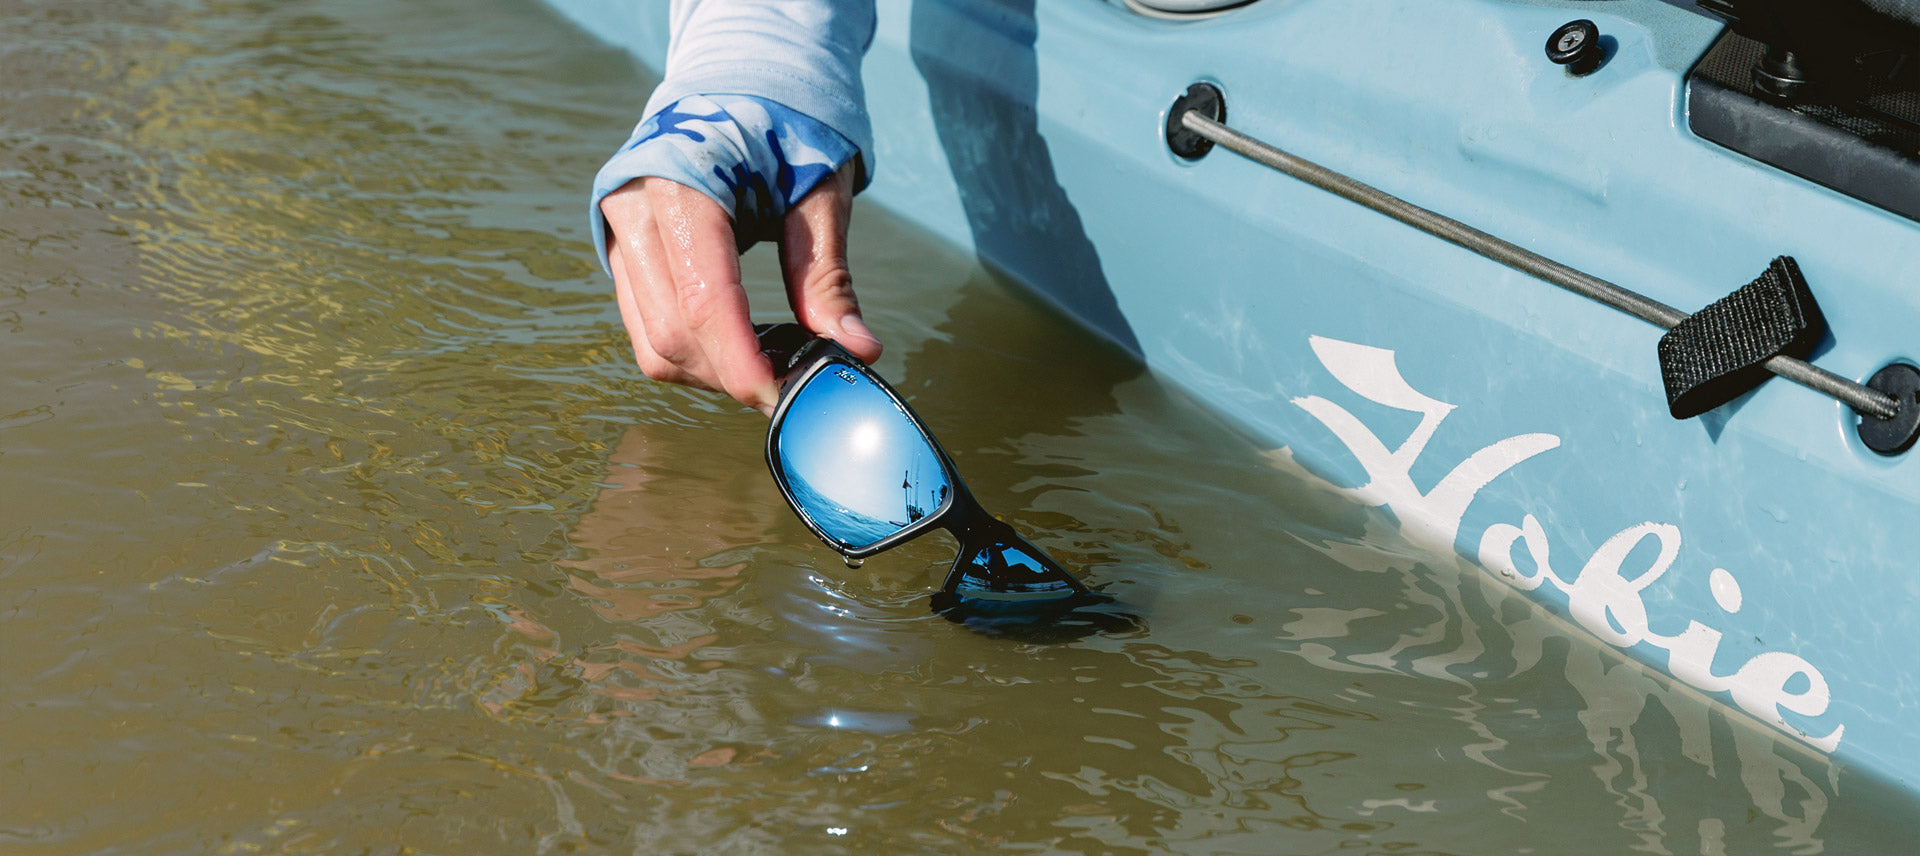 Hobie Eyewear Bluefin Polarized Sunglasses - Floating in the water